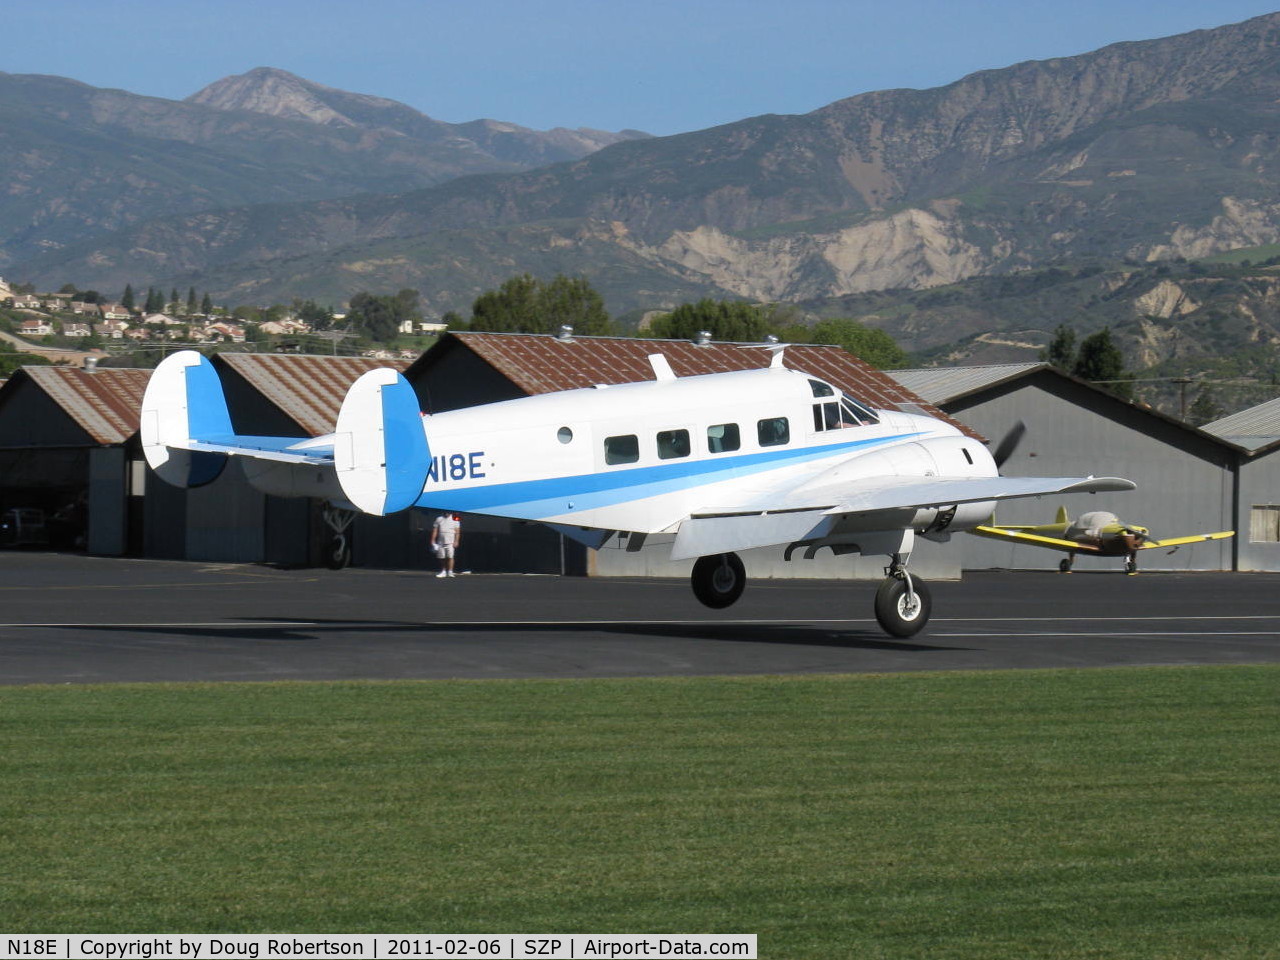 N18E, 1958 Beech E18S C/N BA-383, 1985 Beech SUPER E18S, two P&W R-985 Wasp Jrs. 450 Hp each, landing Rwy 04